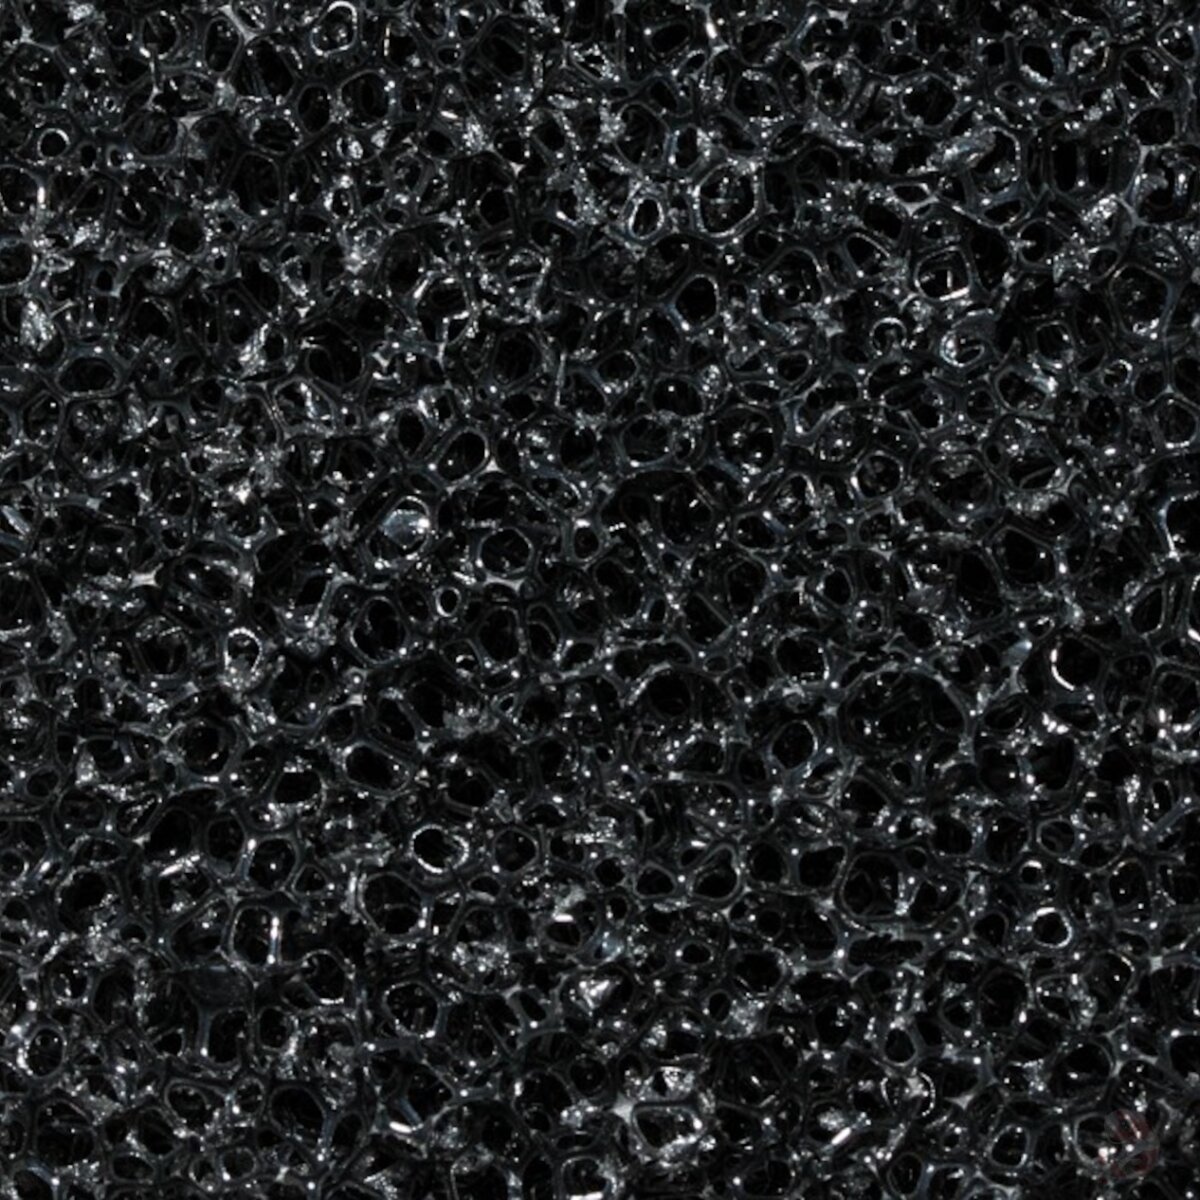 Filtermatte schwarz, 100 x 50 x 10 cm, 20 ppi